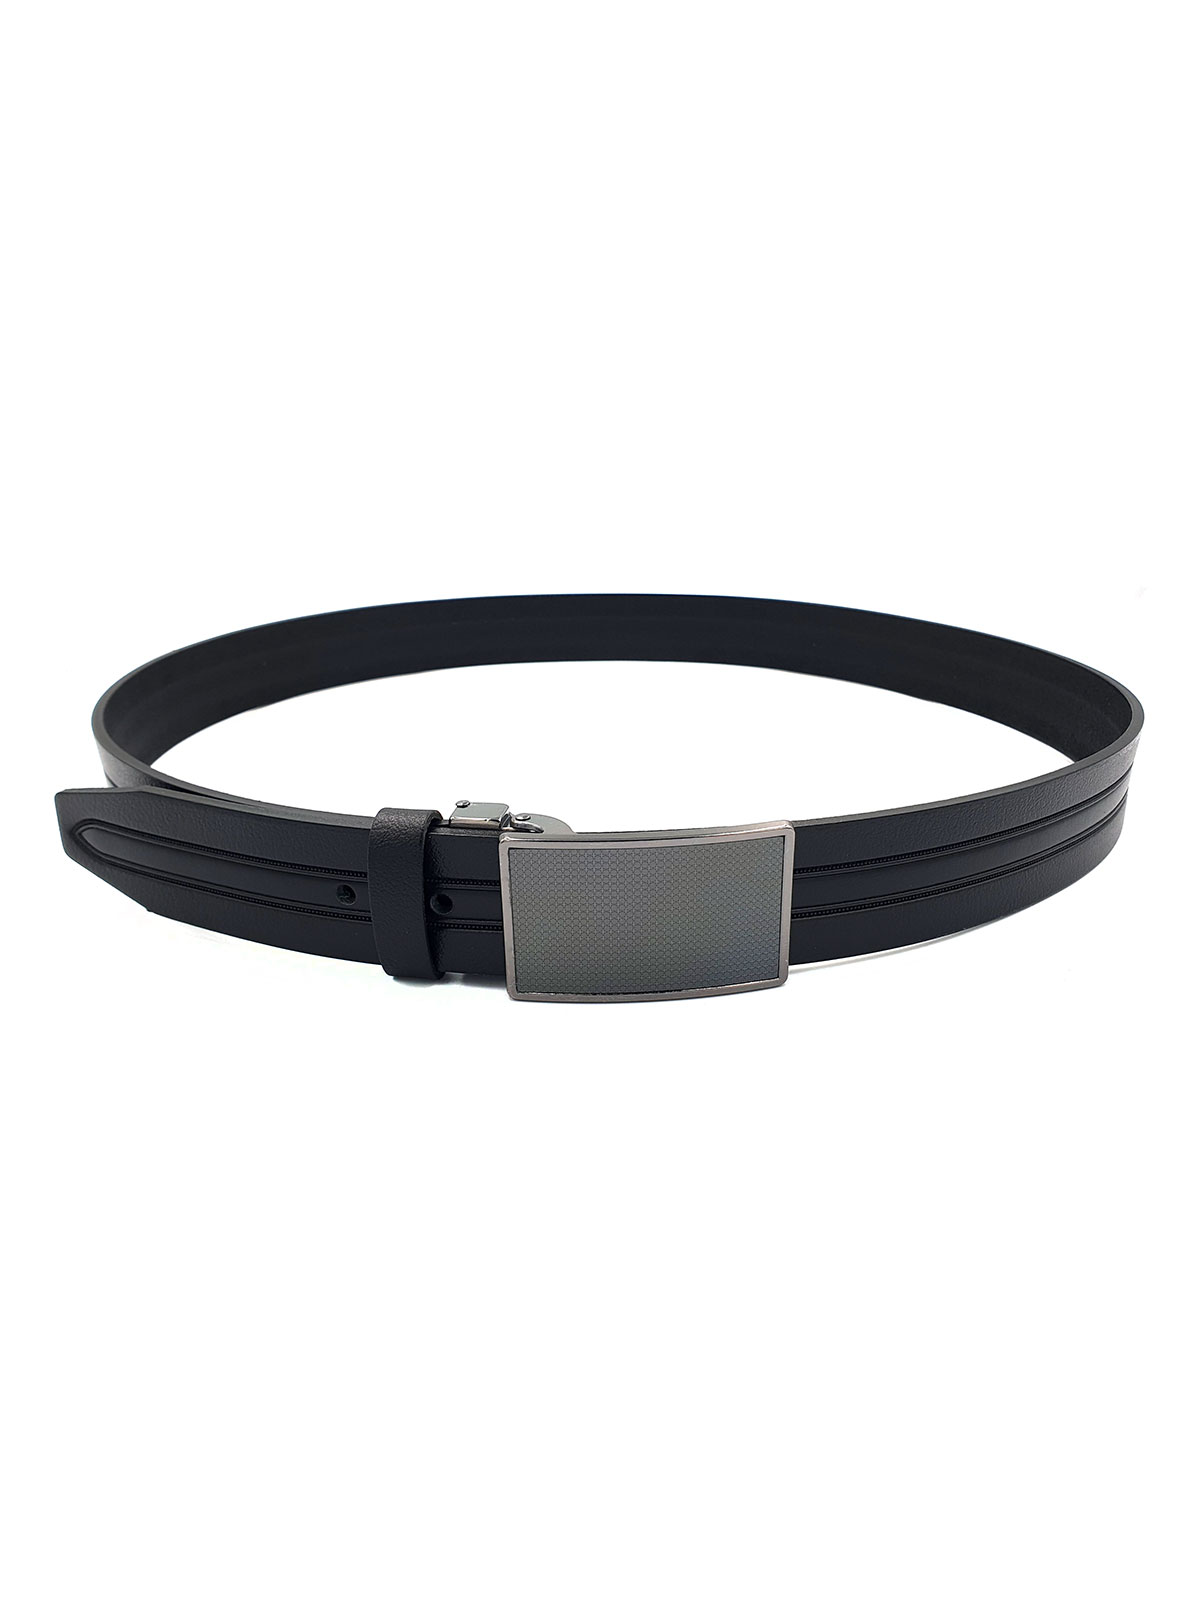 Belt in black with metal plate - 10427 - € 24.75 img2